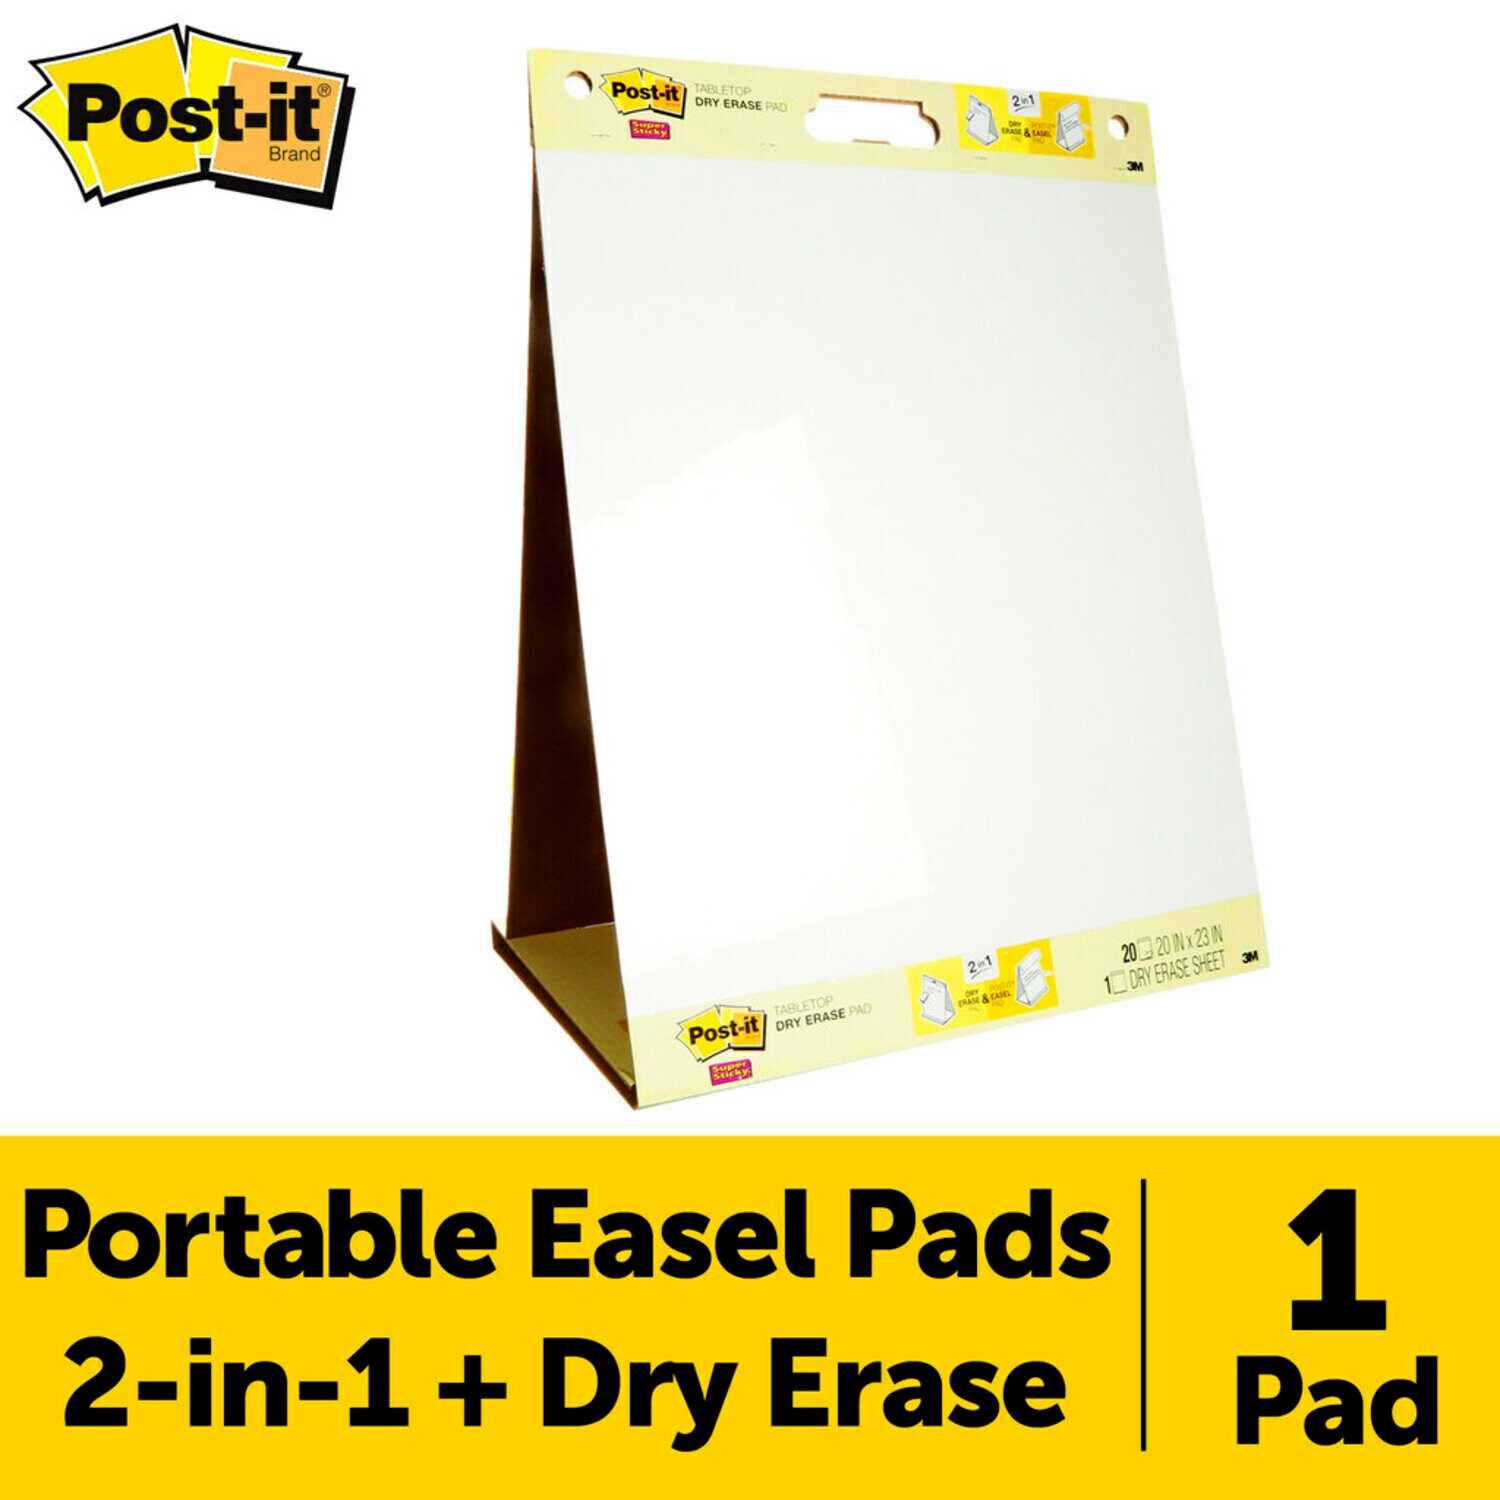 561 Post-it Self-Stick Easel Pad, Ruled, 25 x 30, Yellow, 2 30-Sheet Pads 3M